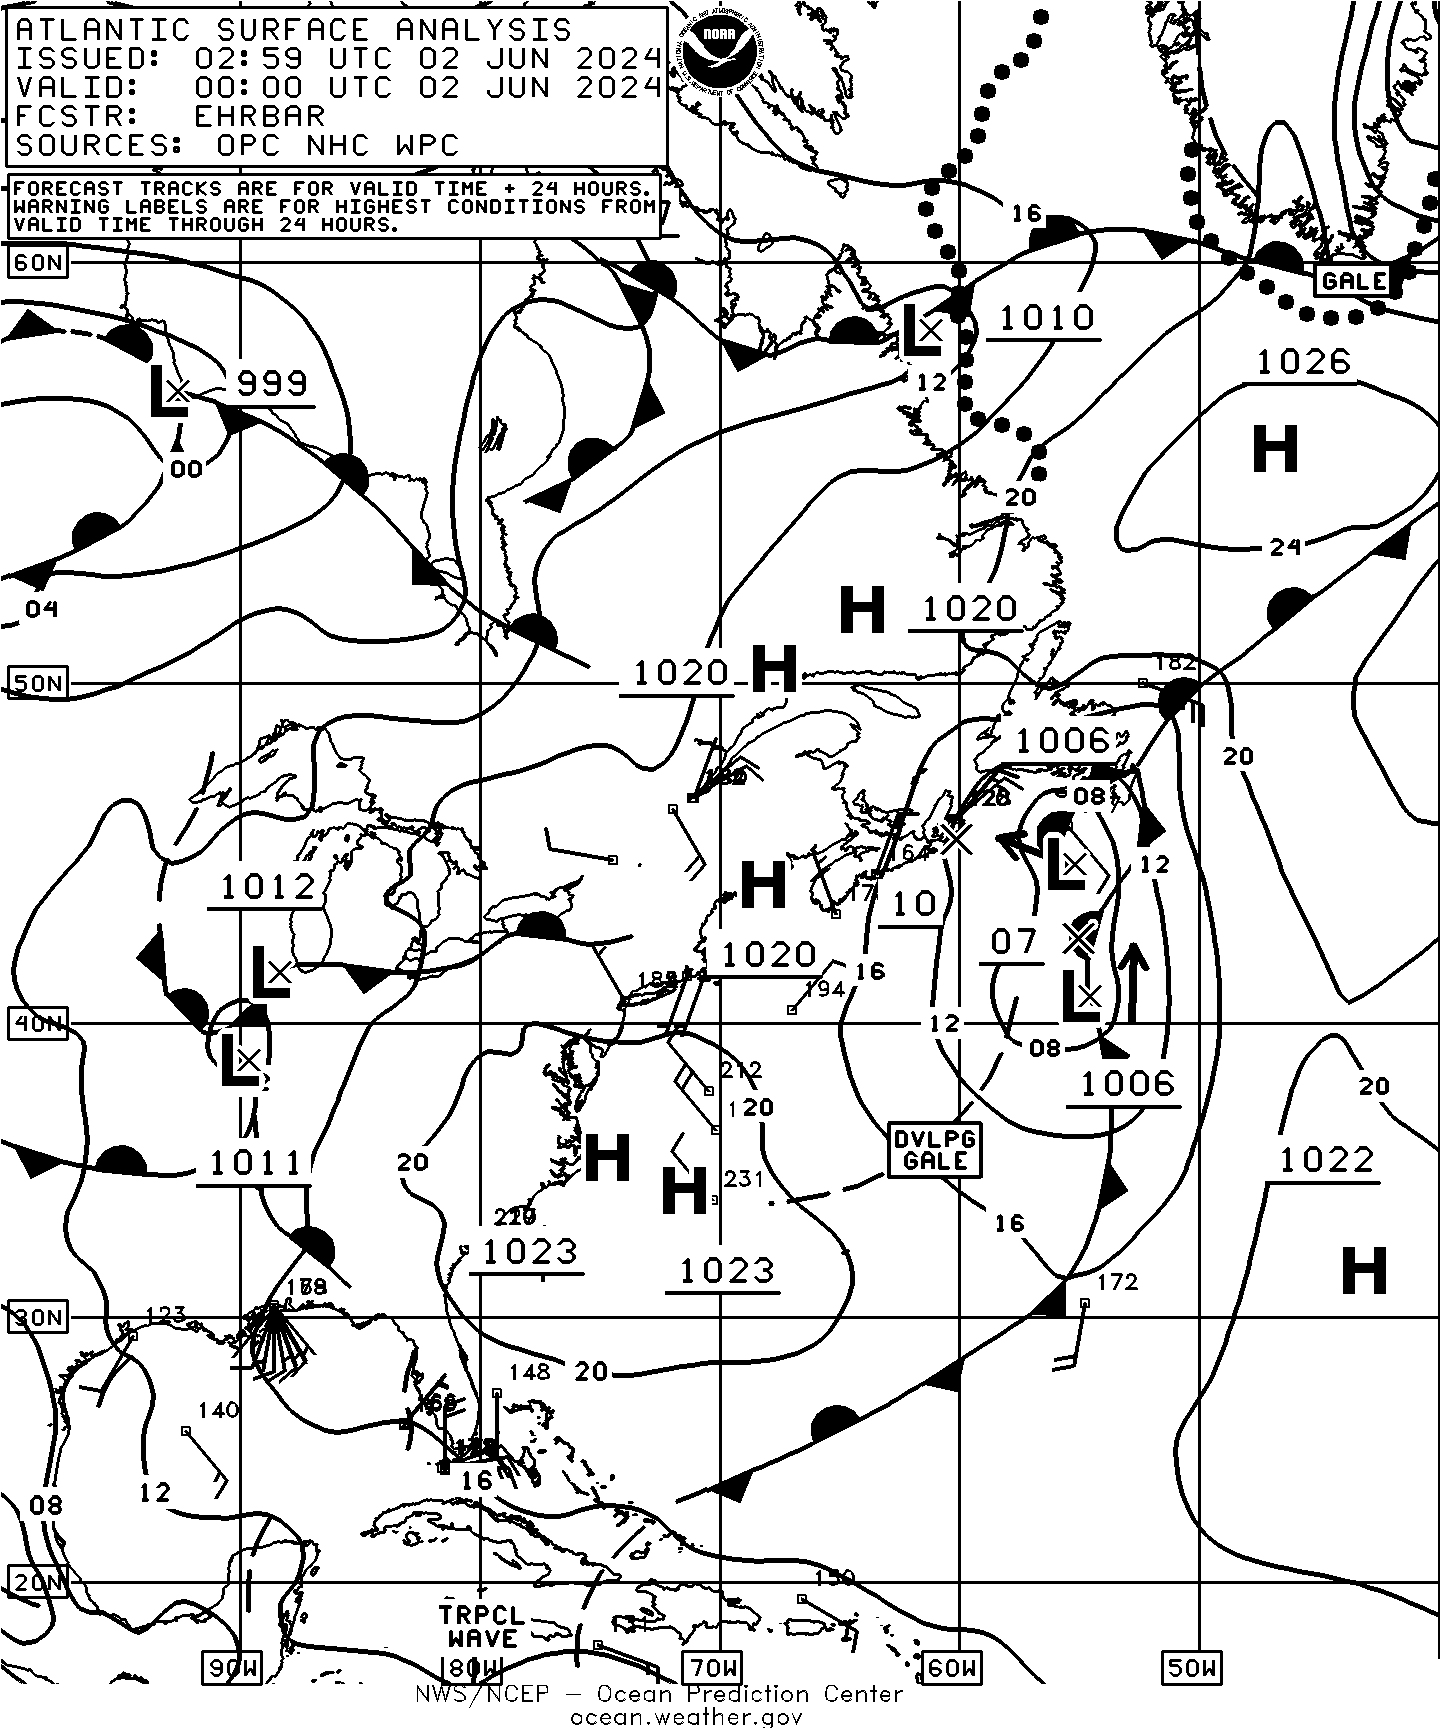 Image of Atlantic Surface Analysis